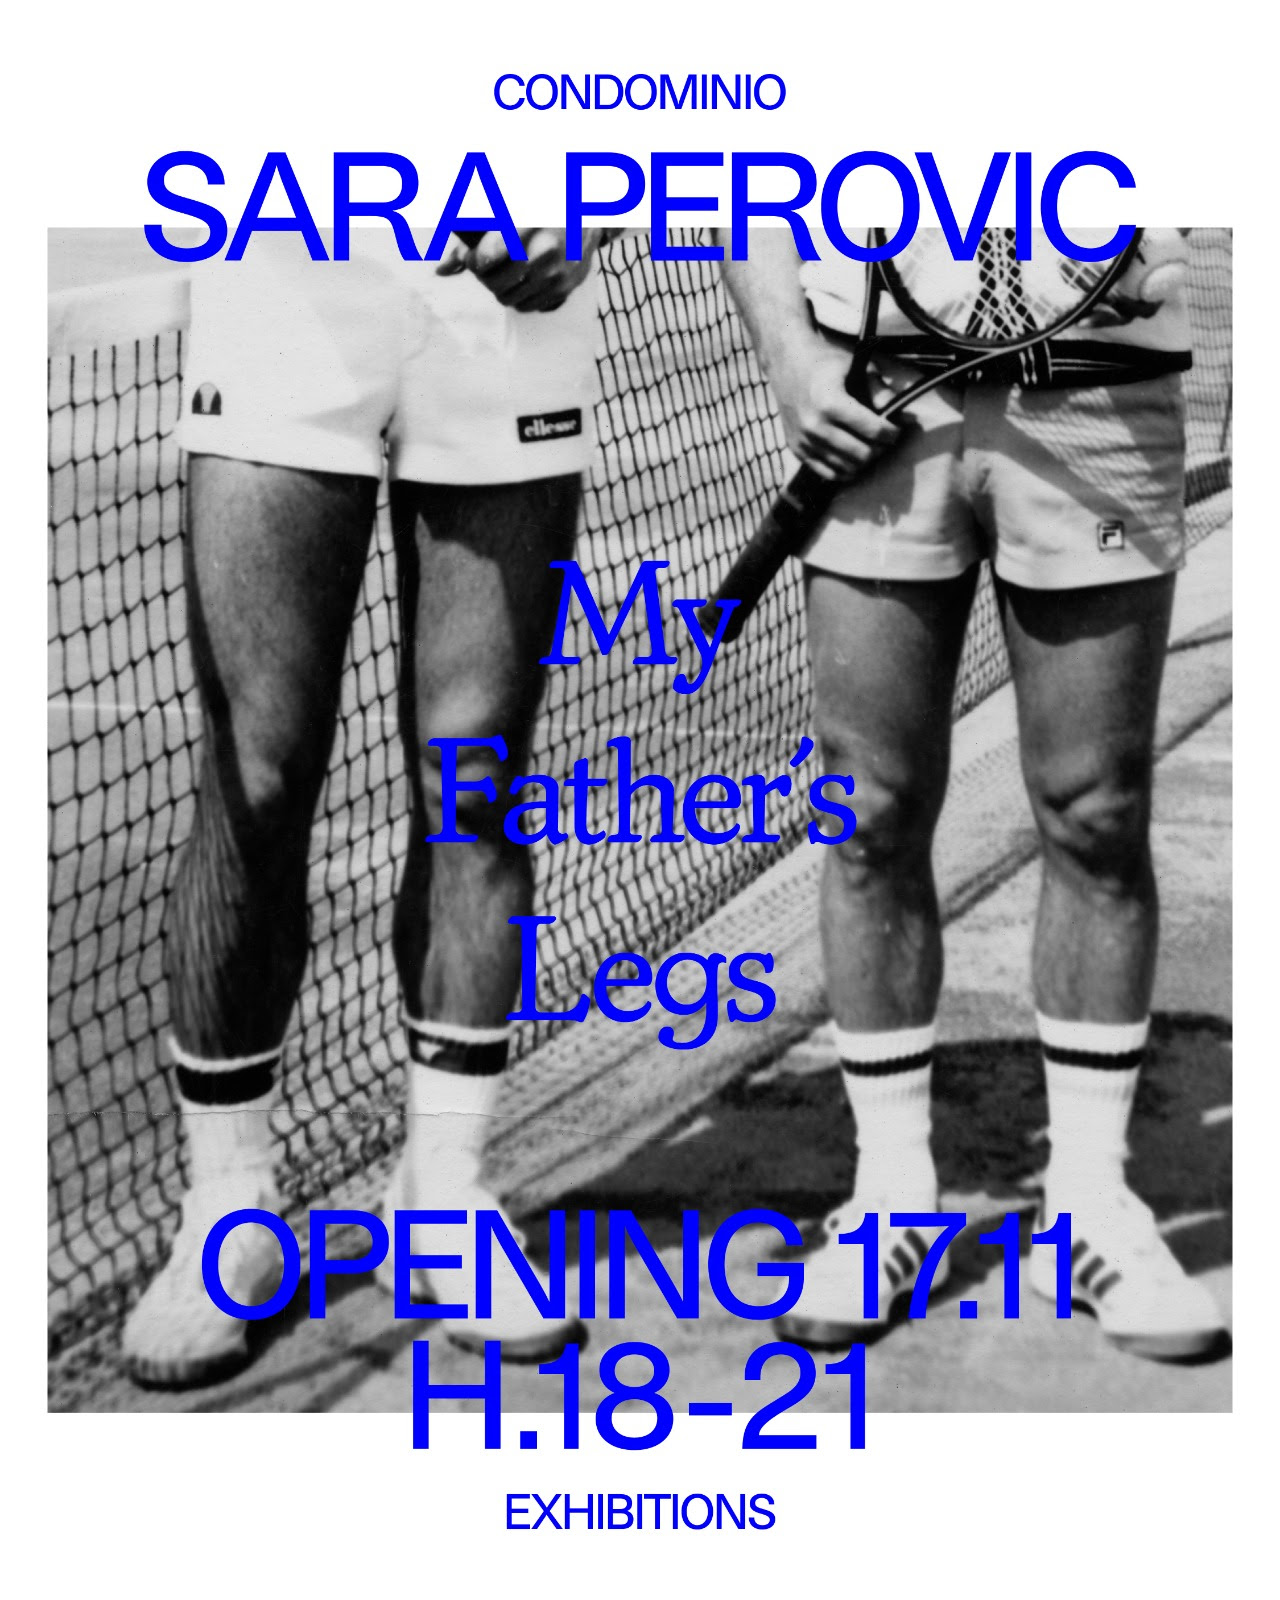 Sara Perovic - My Father’s Legs